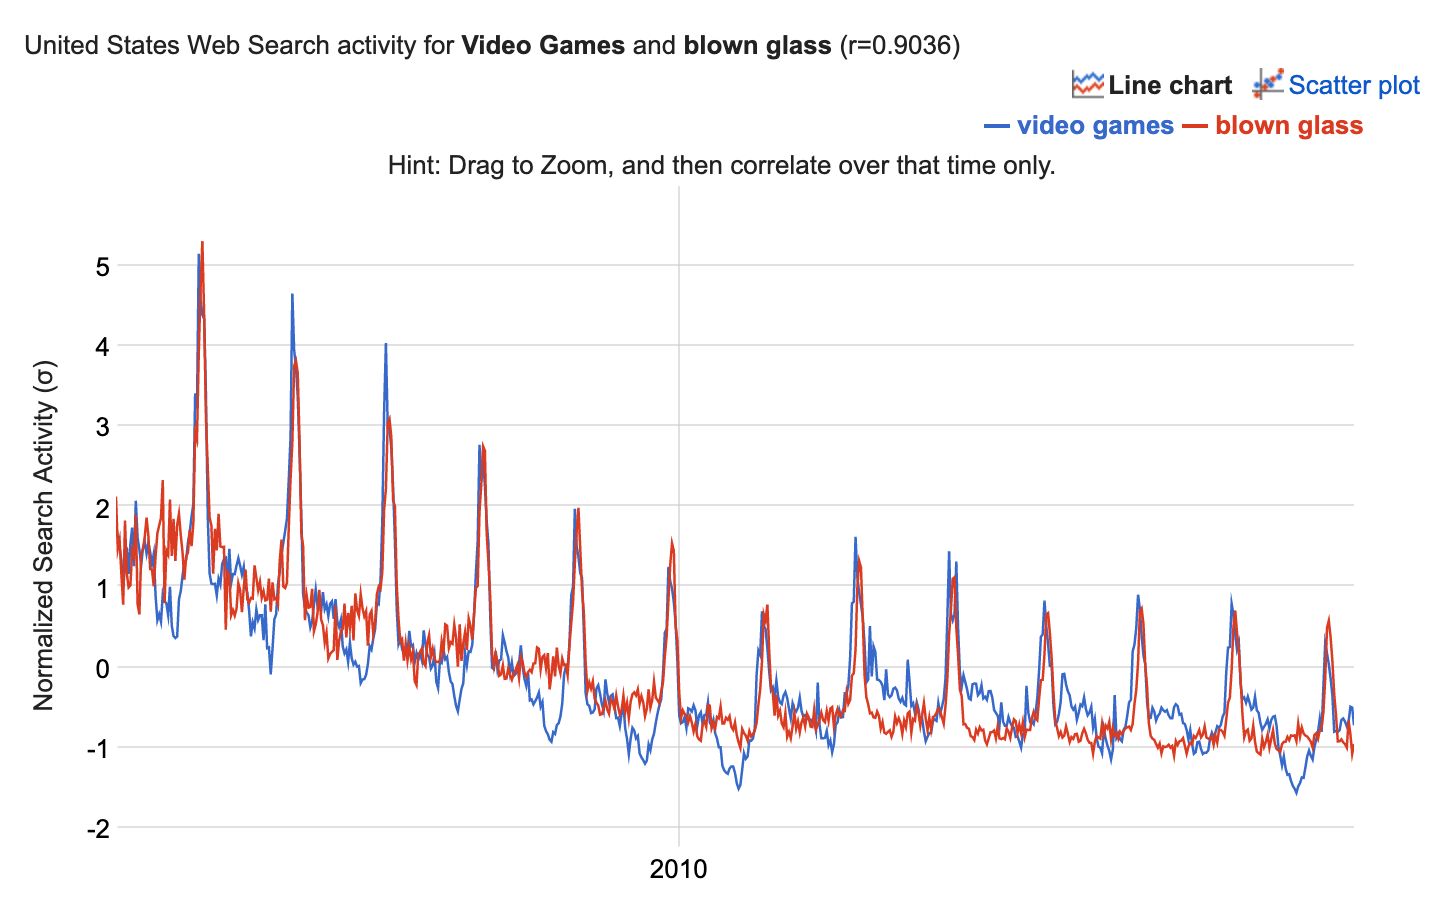 Сделано с помощью сервиса Google Correlate: https://www.google.com/trends/correlate/search?e=Video+Games&amp;e=blown+glass&amp;t=weekly&amp;p=us#